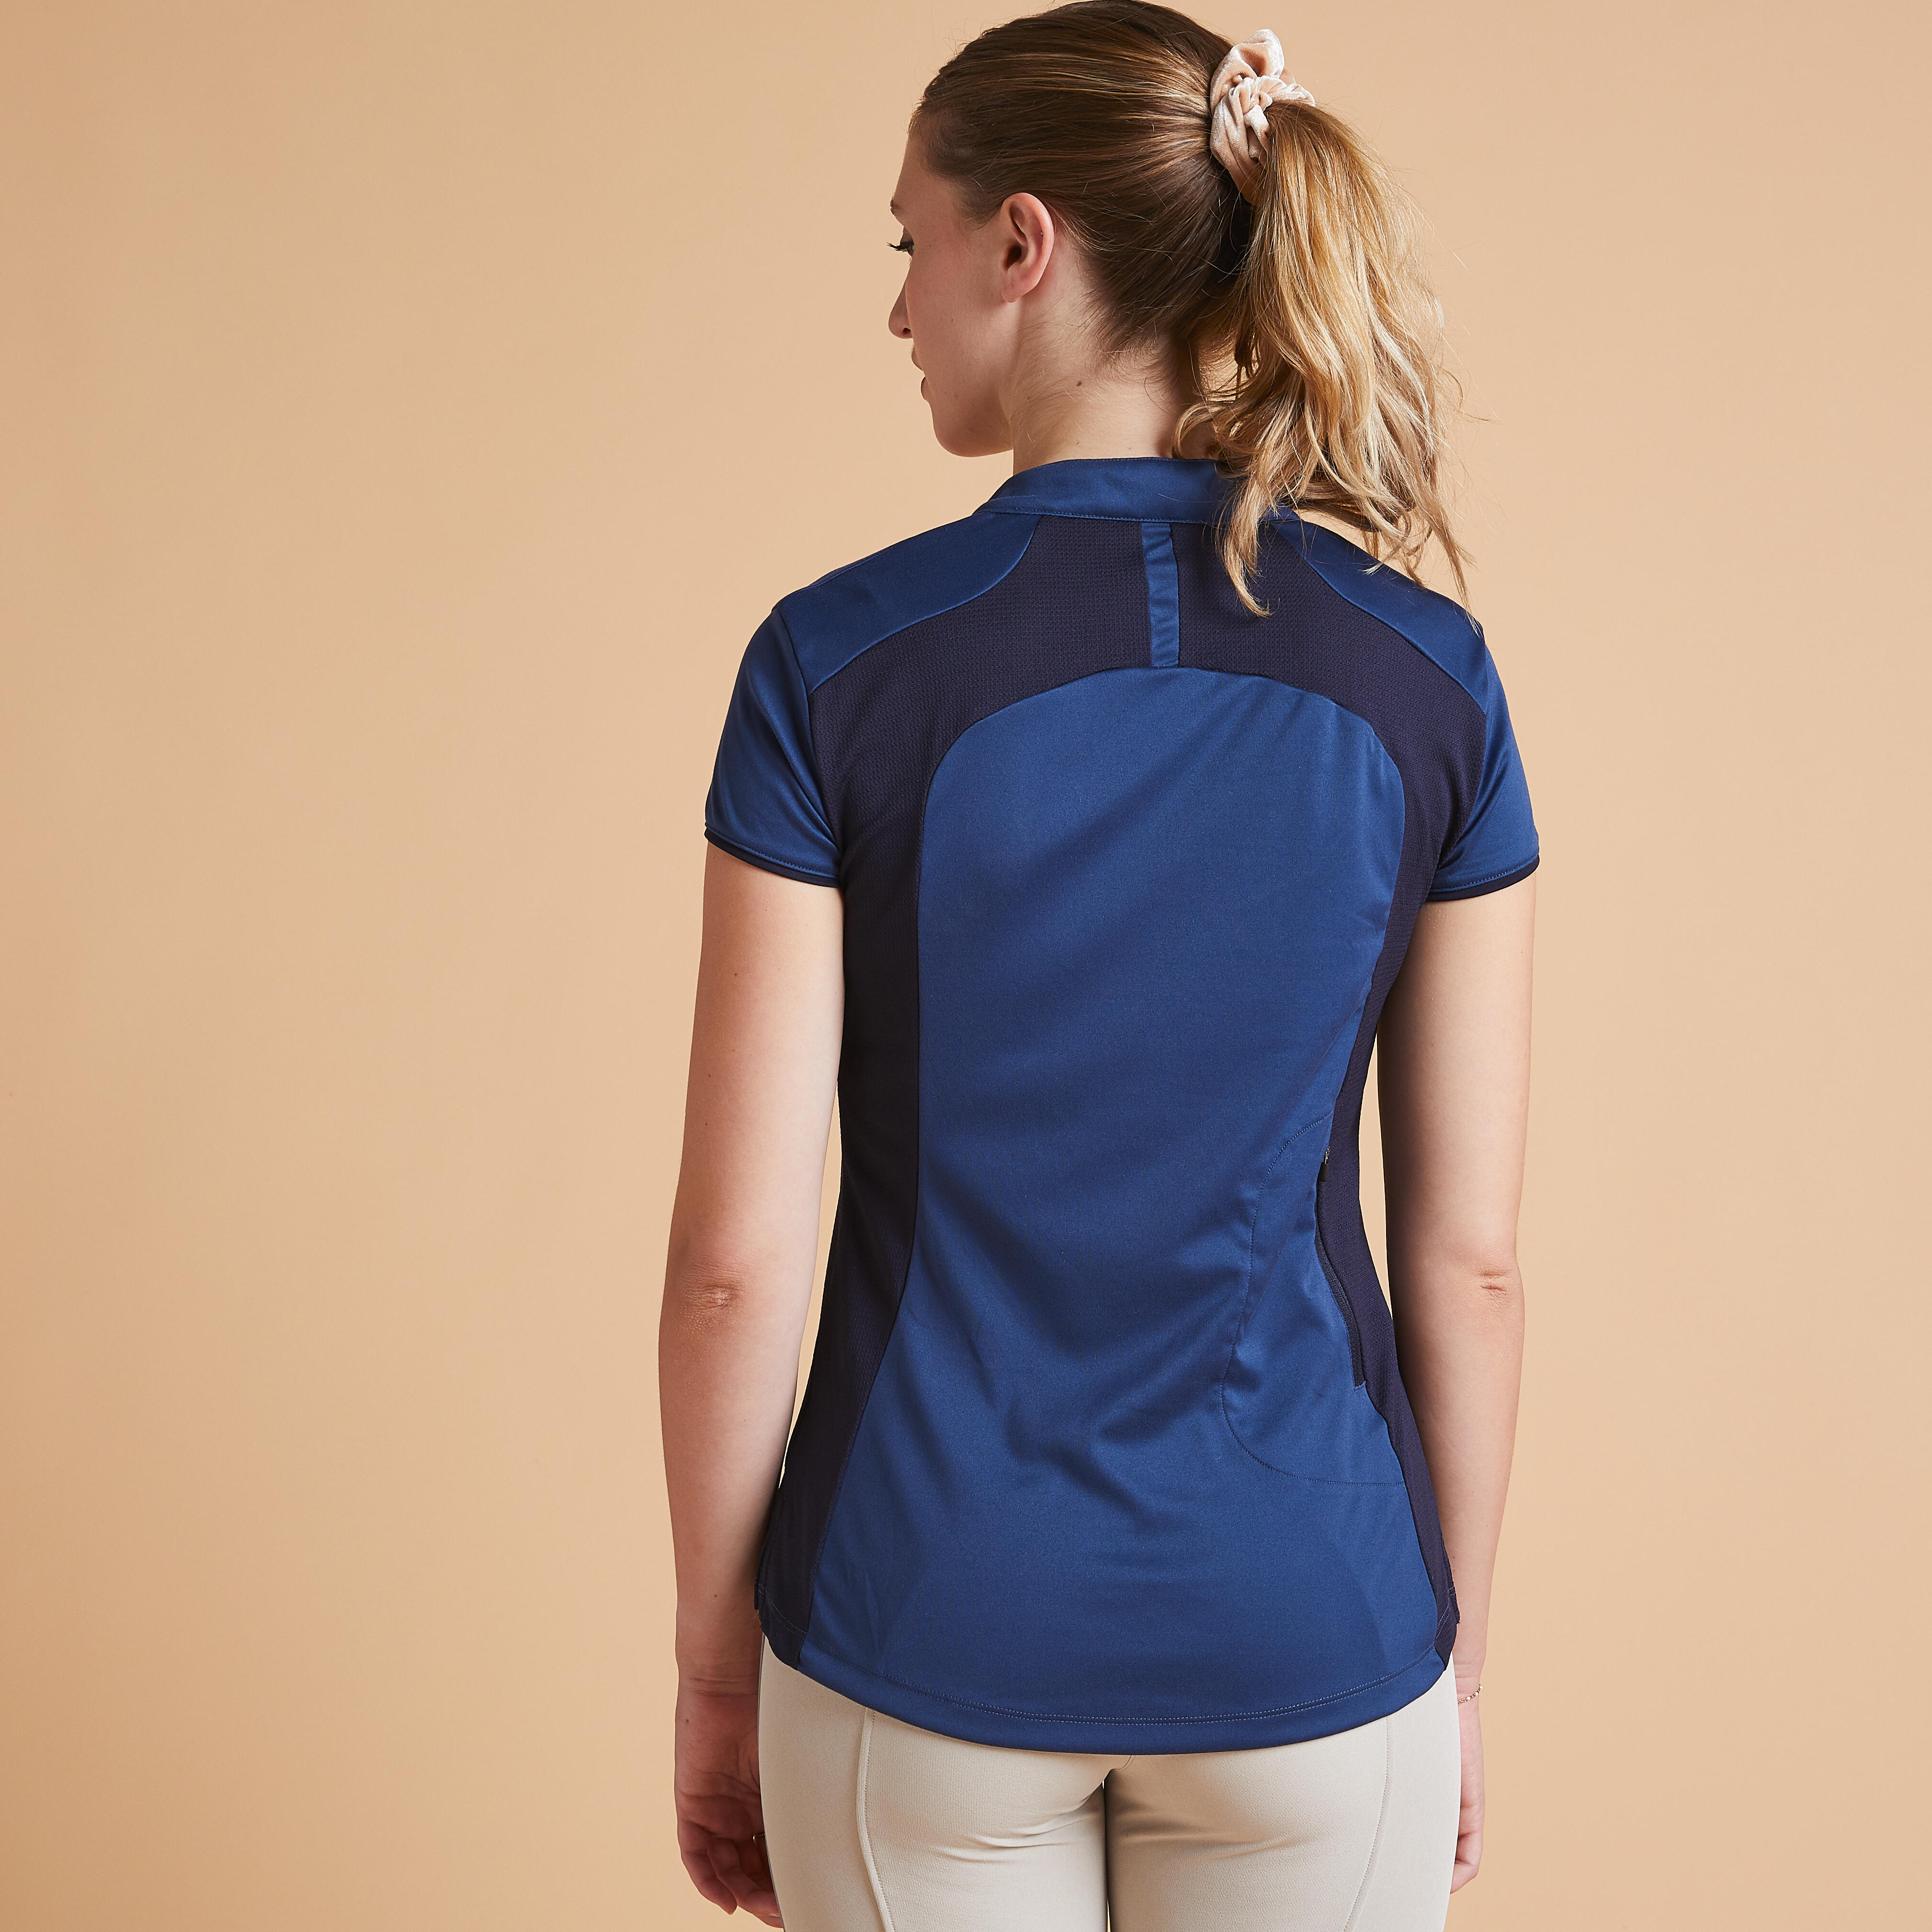 Women's Horse Riding Short-Sleeved Mesh Polo Shirt 500 - Slate Blue - FOUGANZA